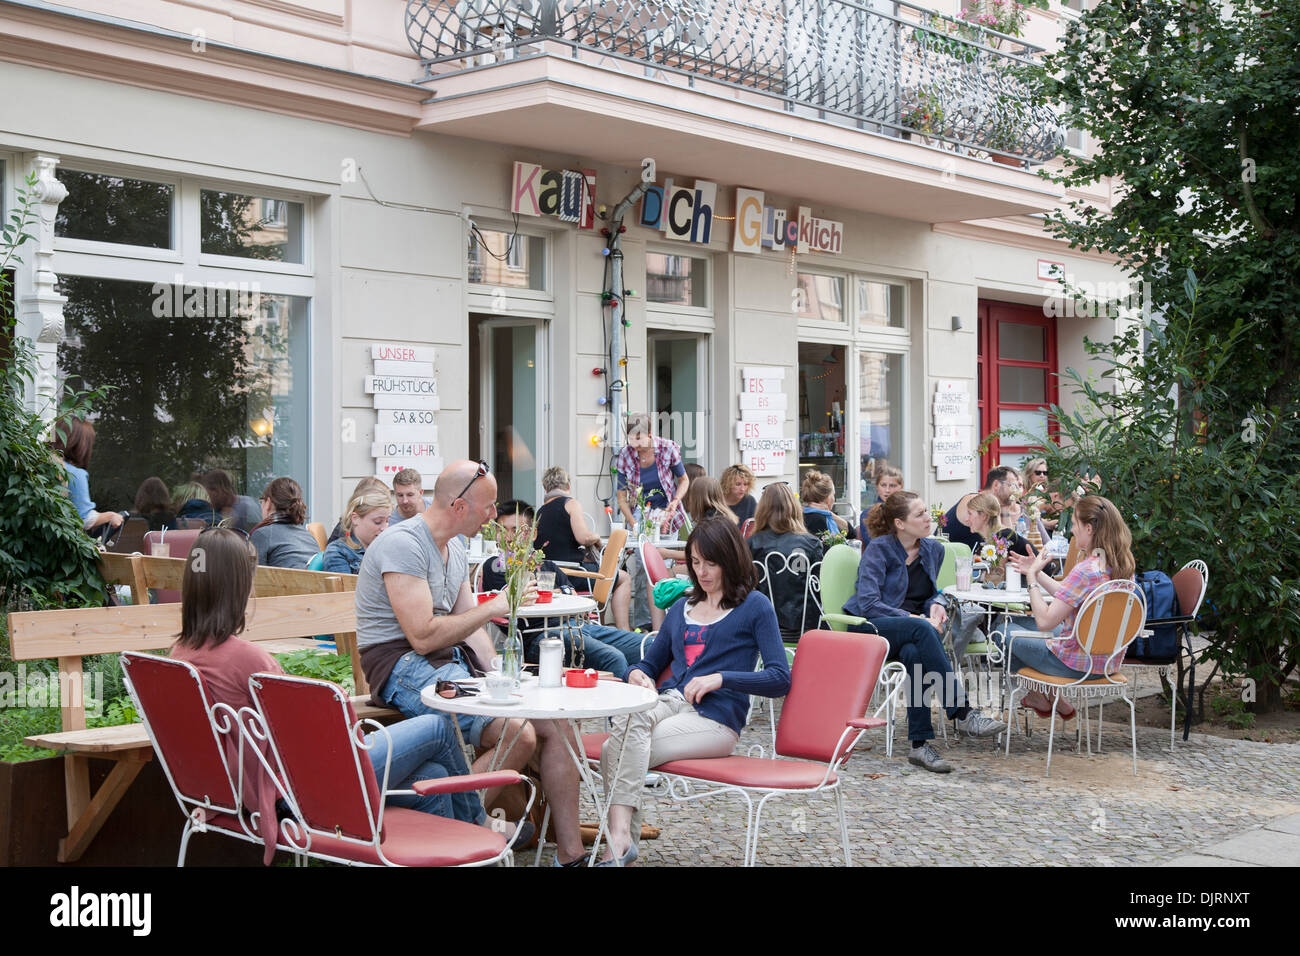 Kauf Dich Glucklich Cafe and Bar Terrace, Oderberger Str; Berlin, Germany Stock Photo